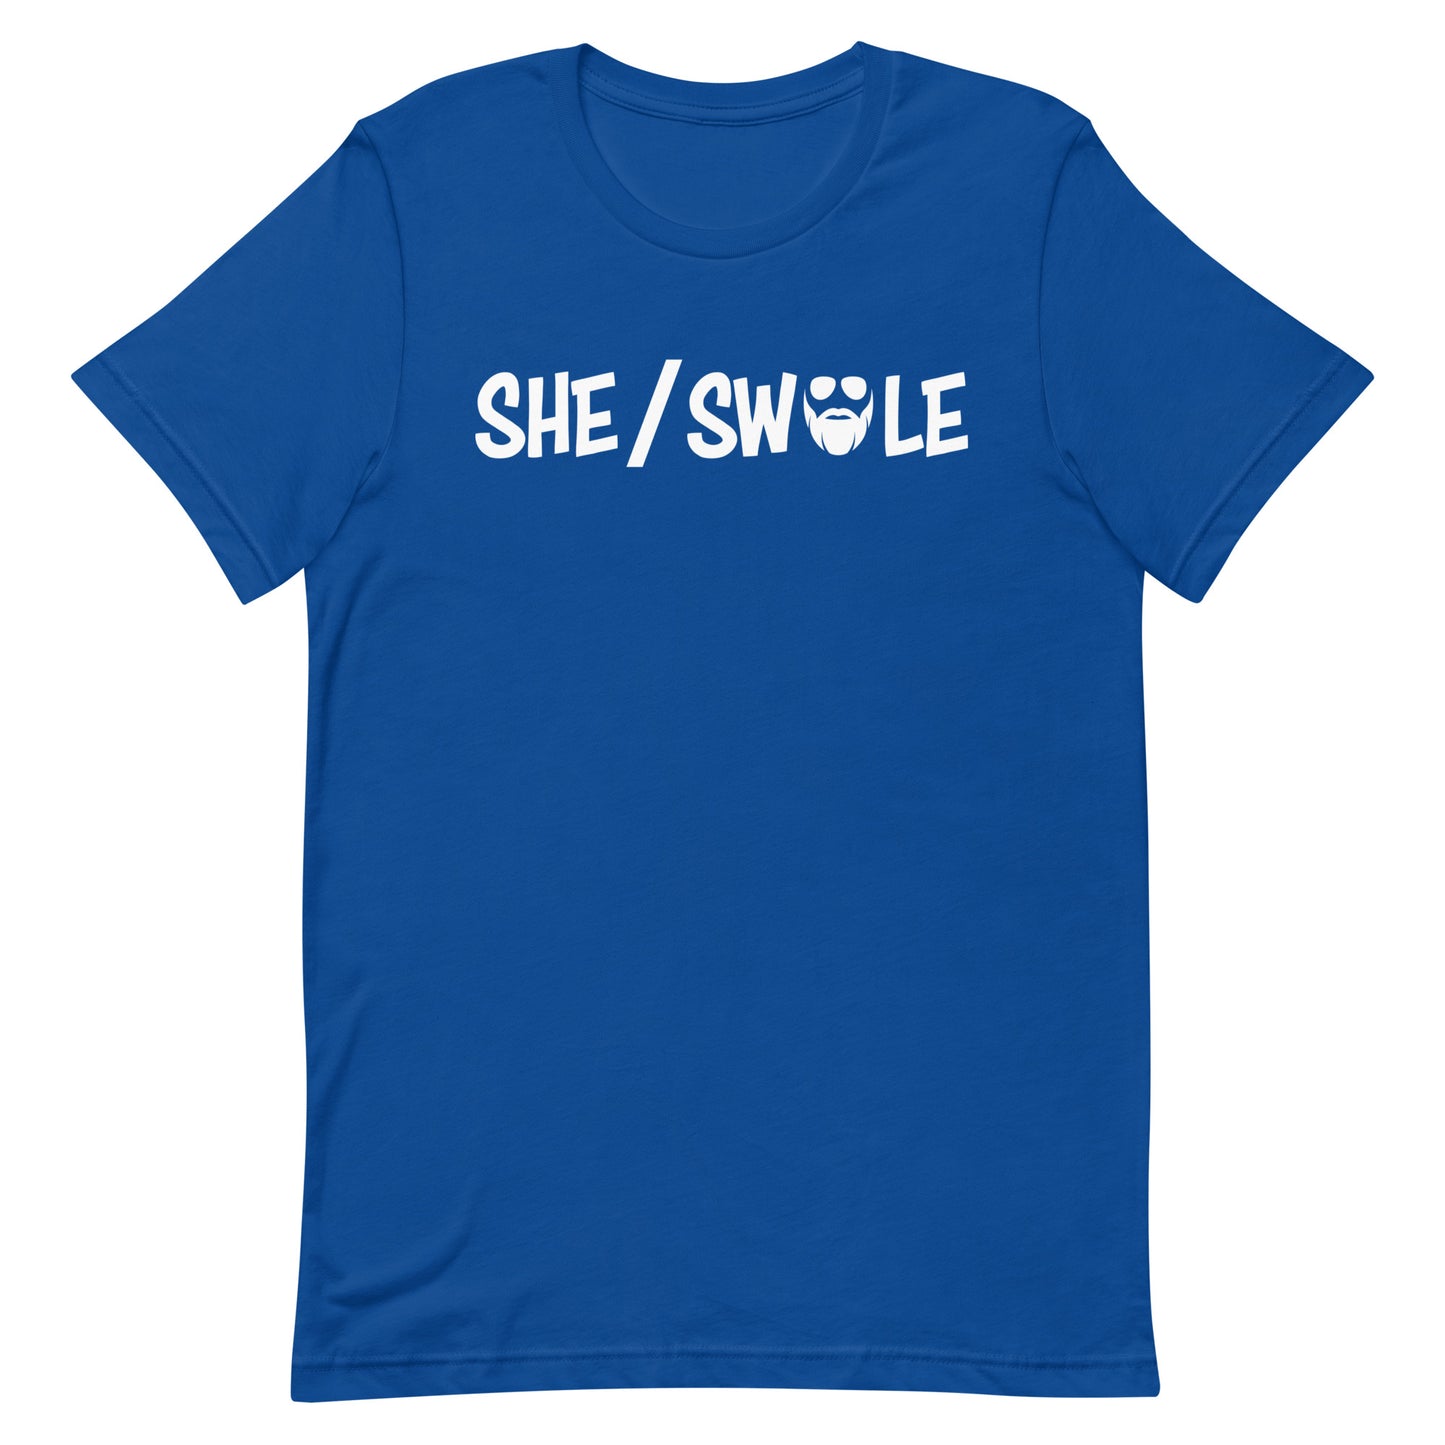 She/Swole T-Shirt